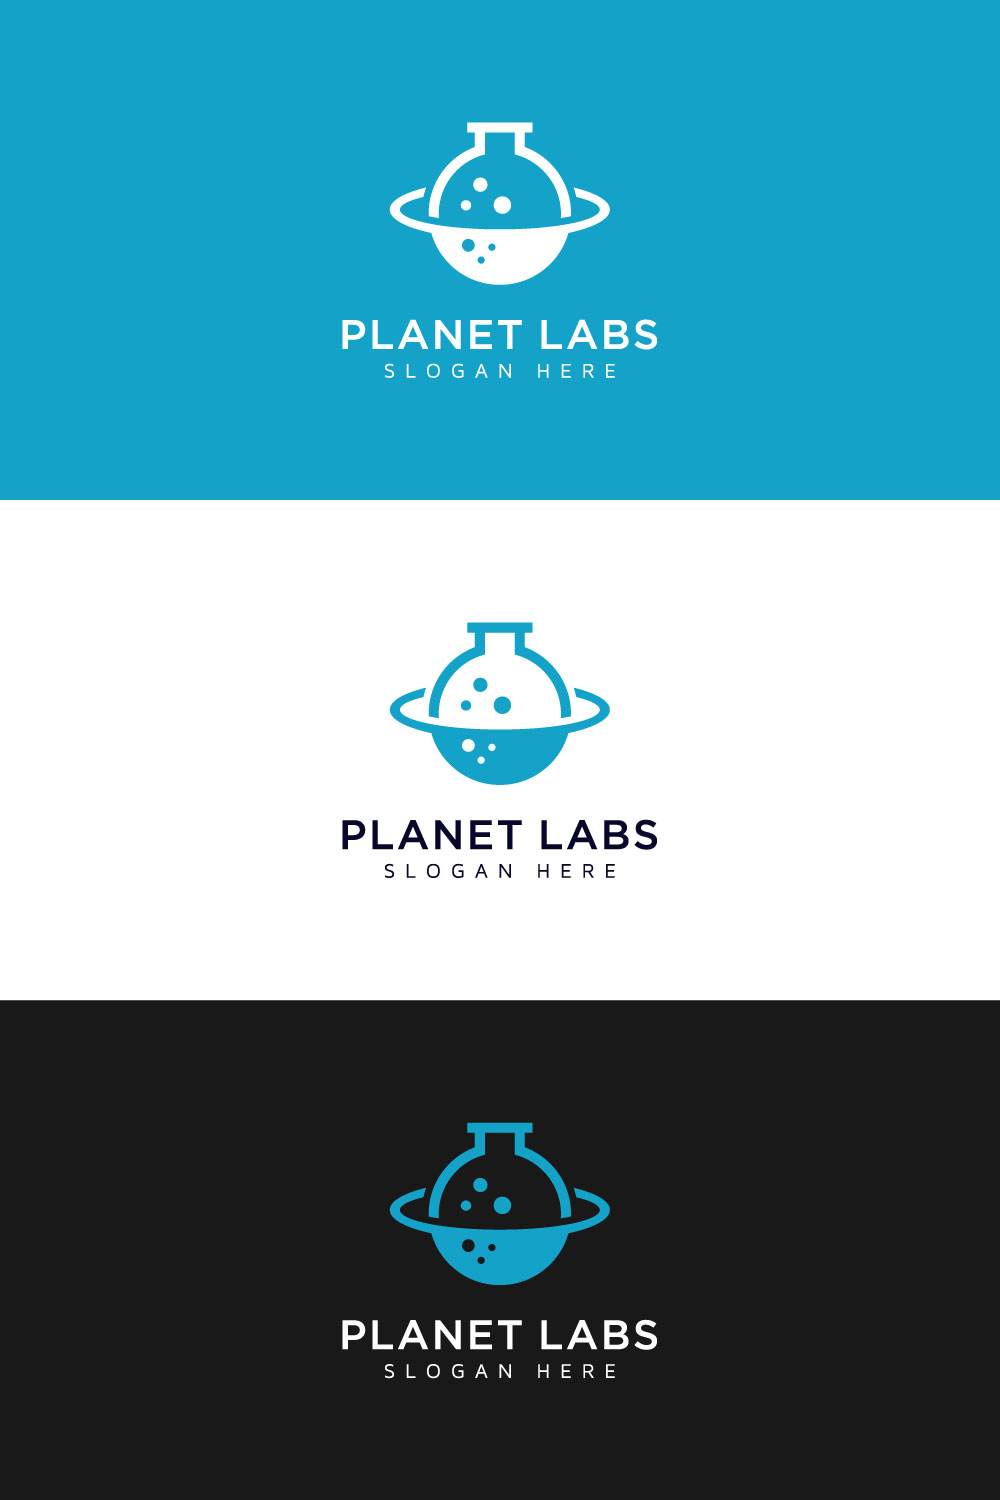 Creative Planet Orbit Labor Lab Abstract Logo Design Pinterest Image.